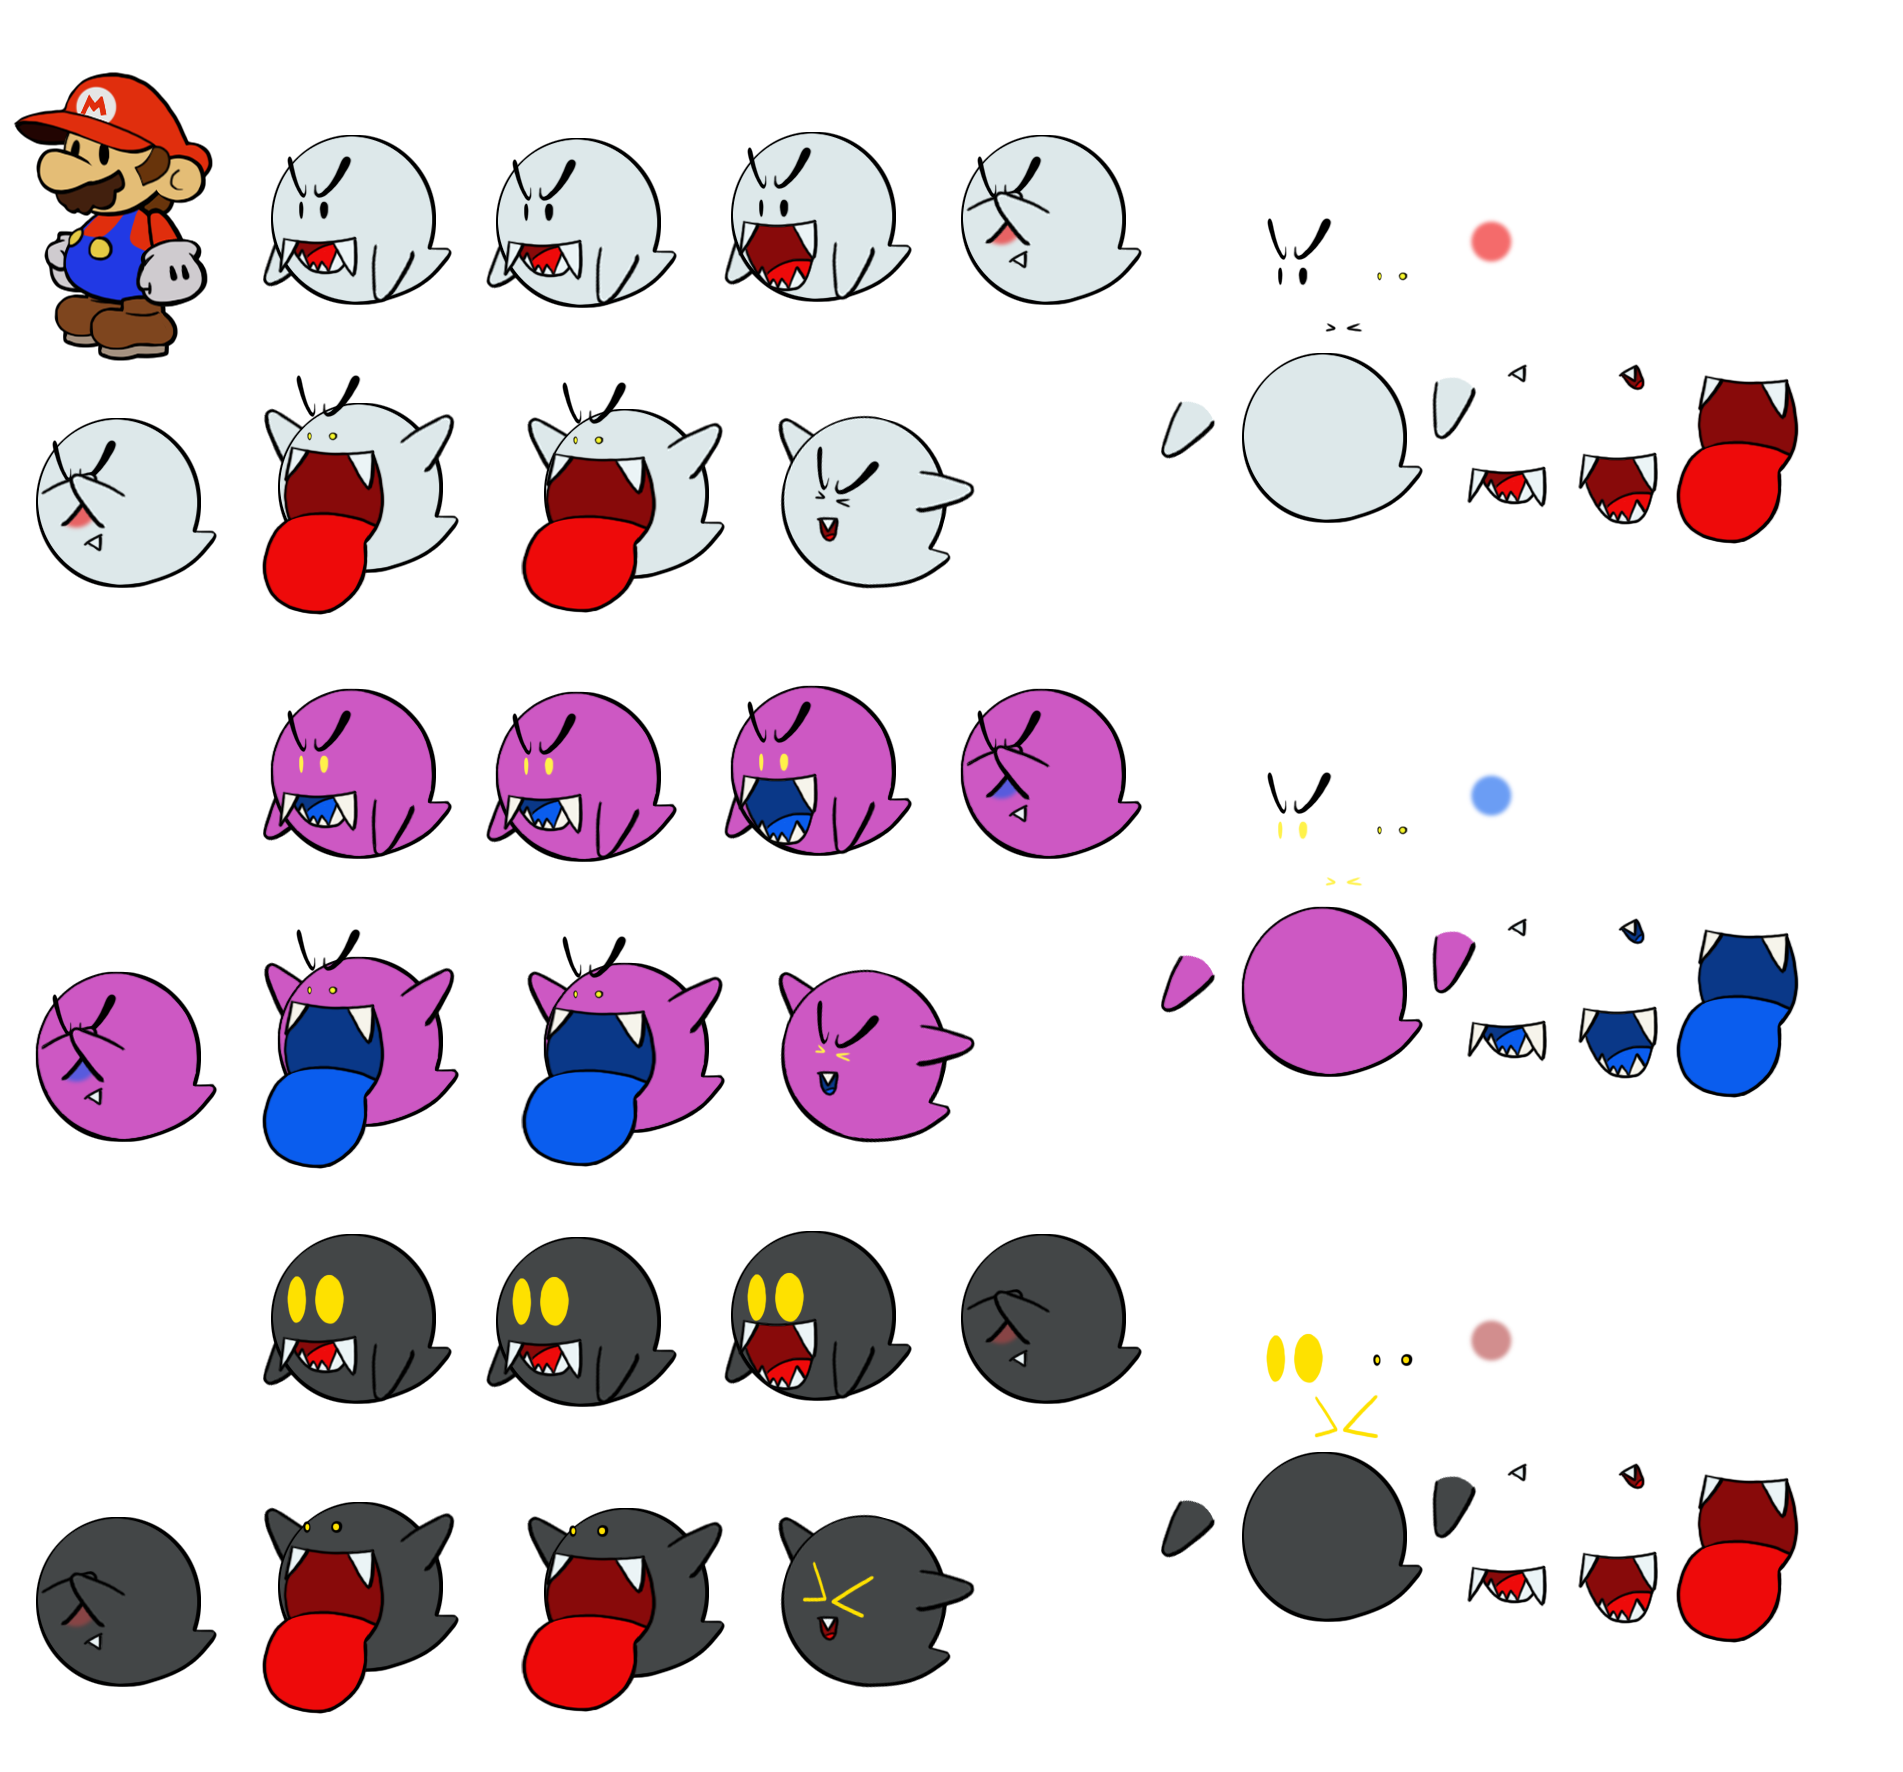 Mario Customs - Boo (Paper Mario-Style)